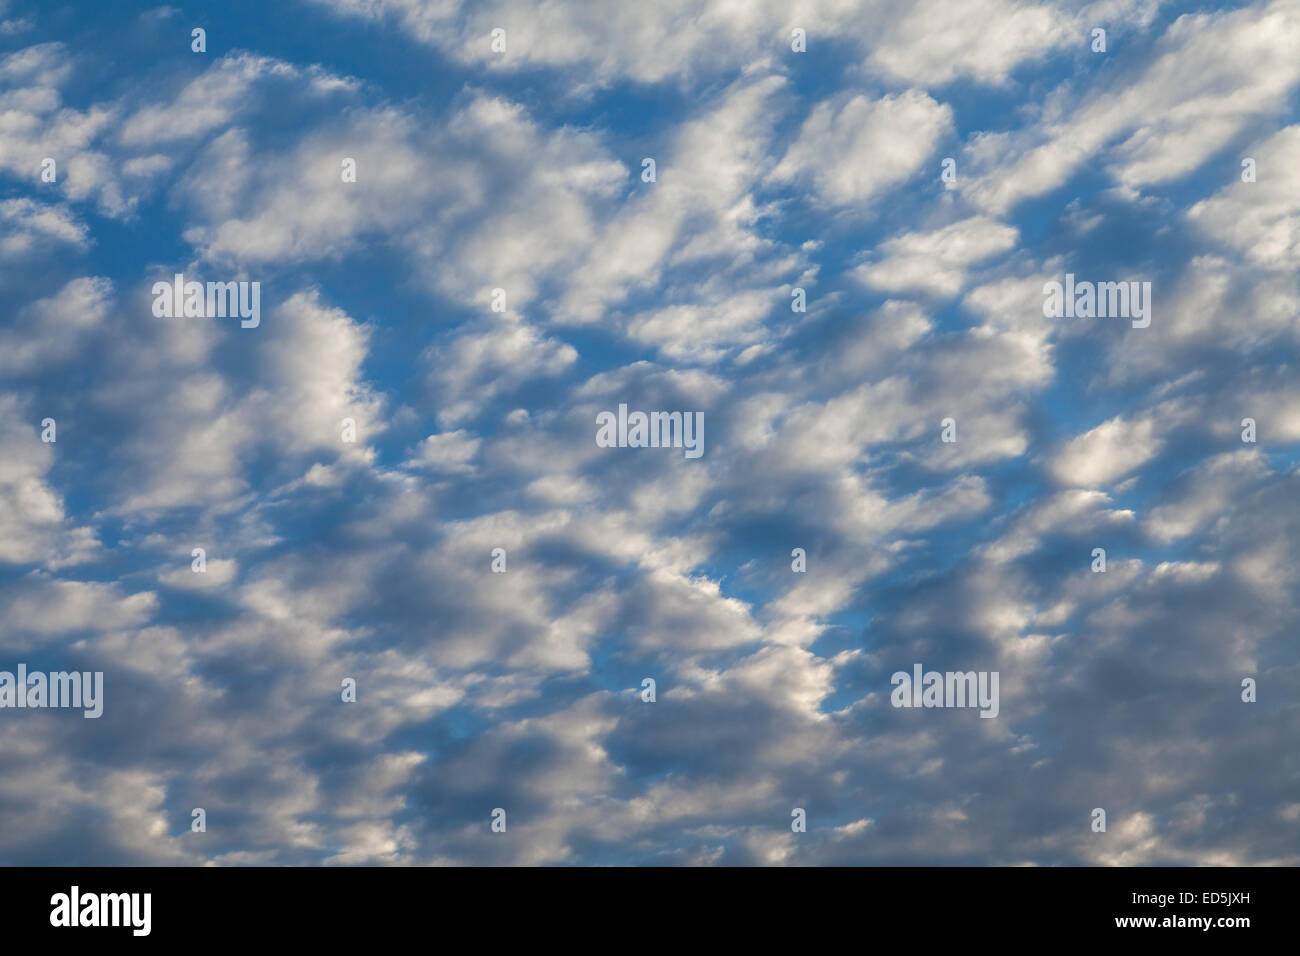 cloud pattern in a blue sky Stock Photo